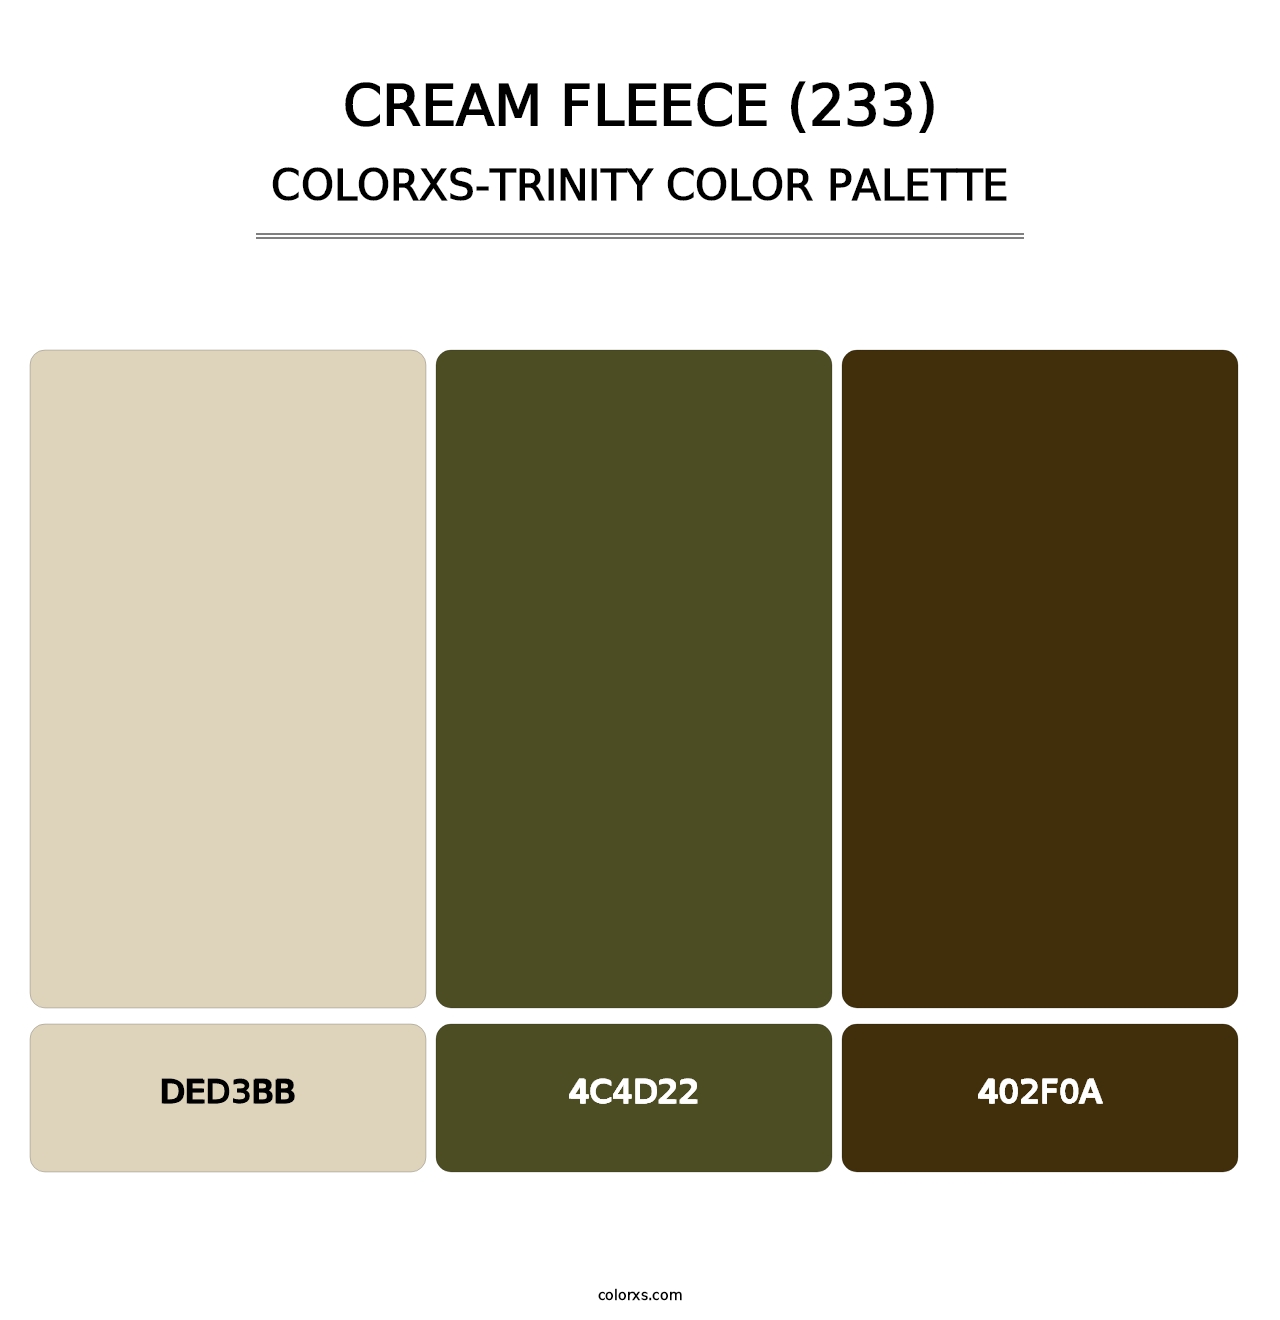 Cream Fleece (233) - Colorxs Trinity Palette